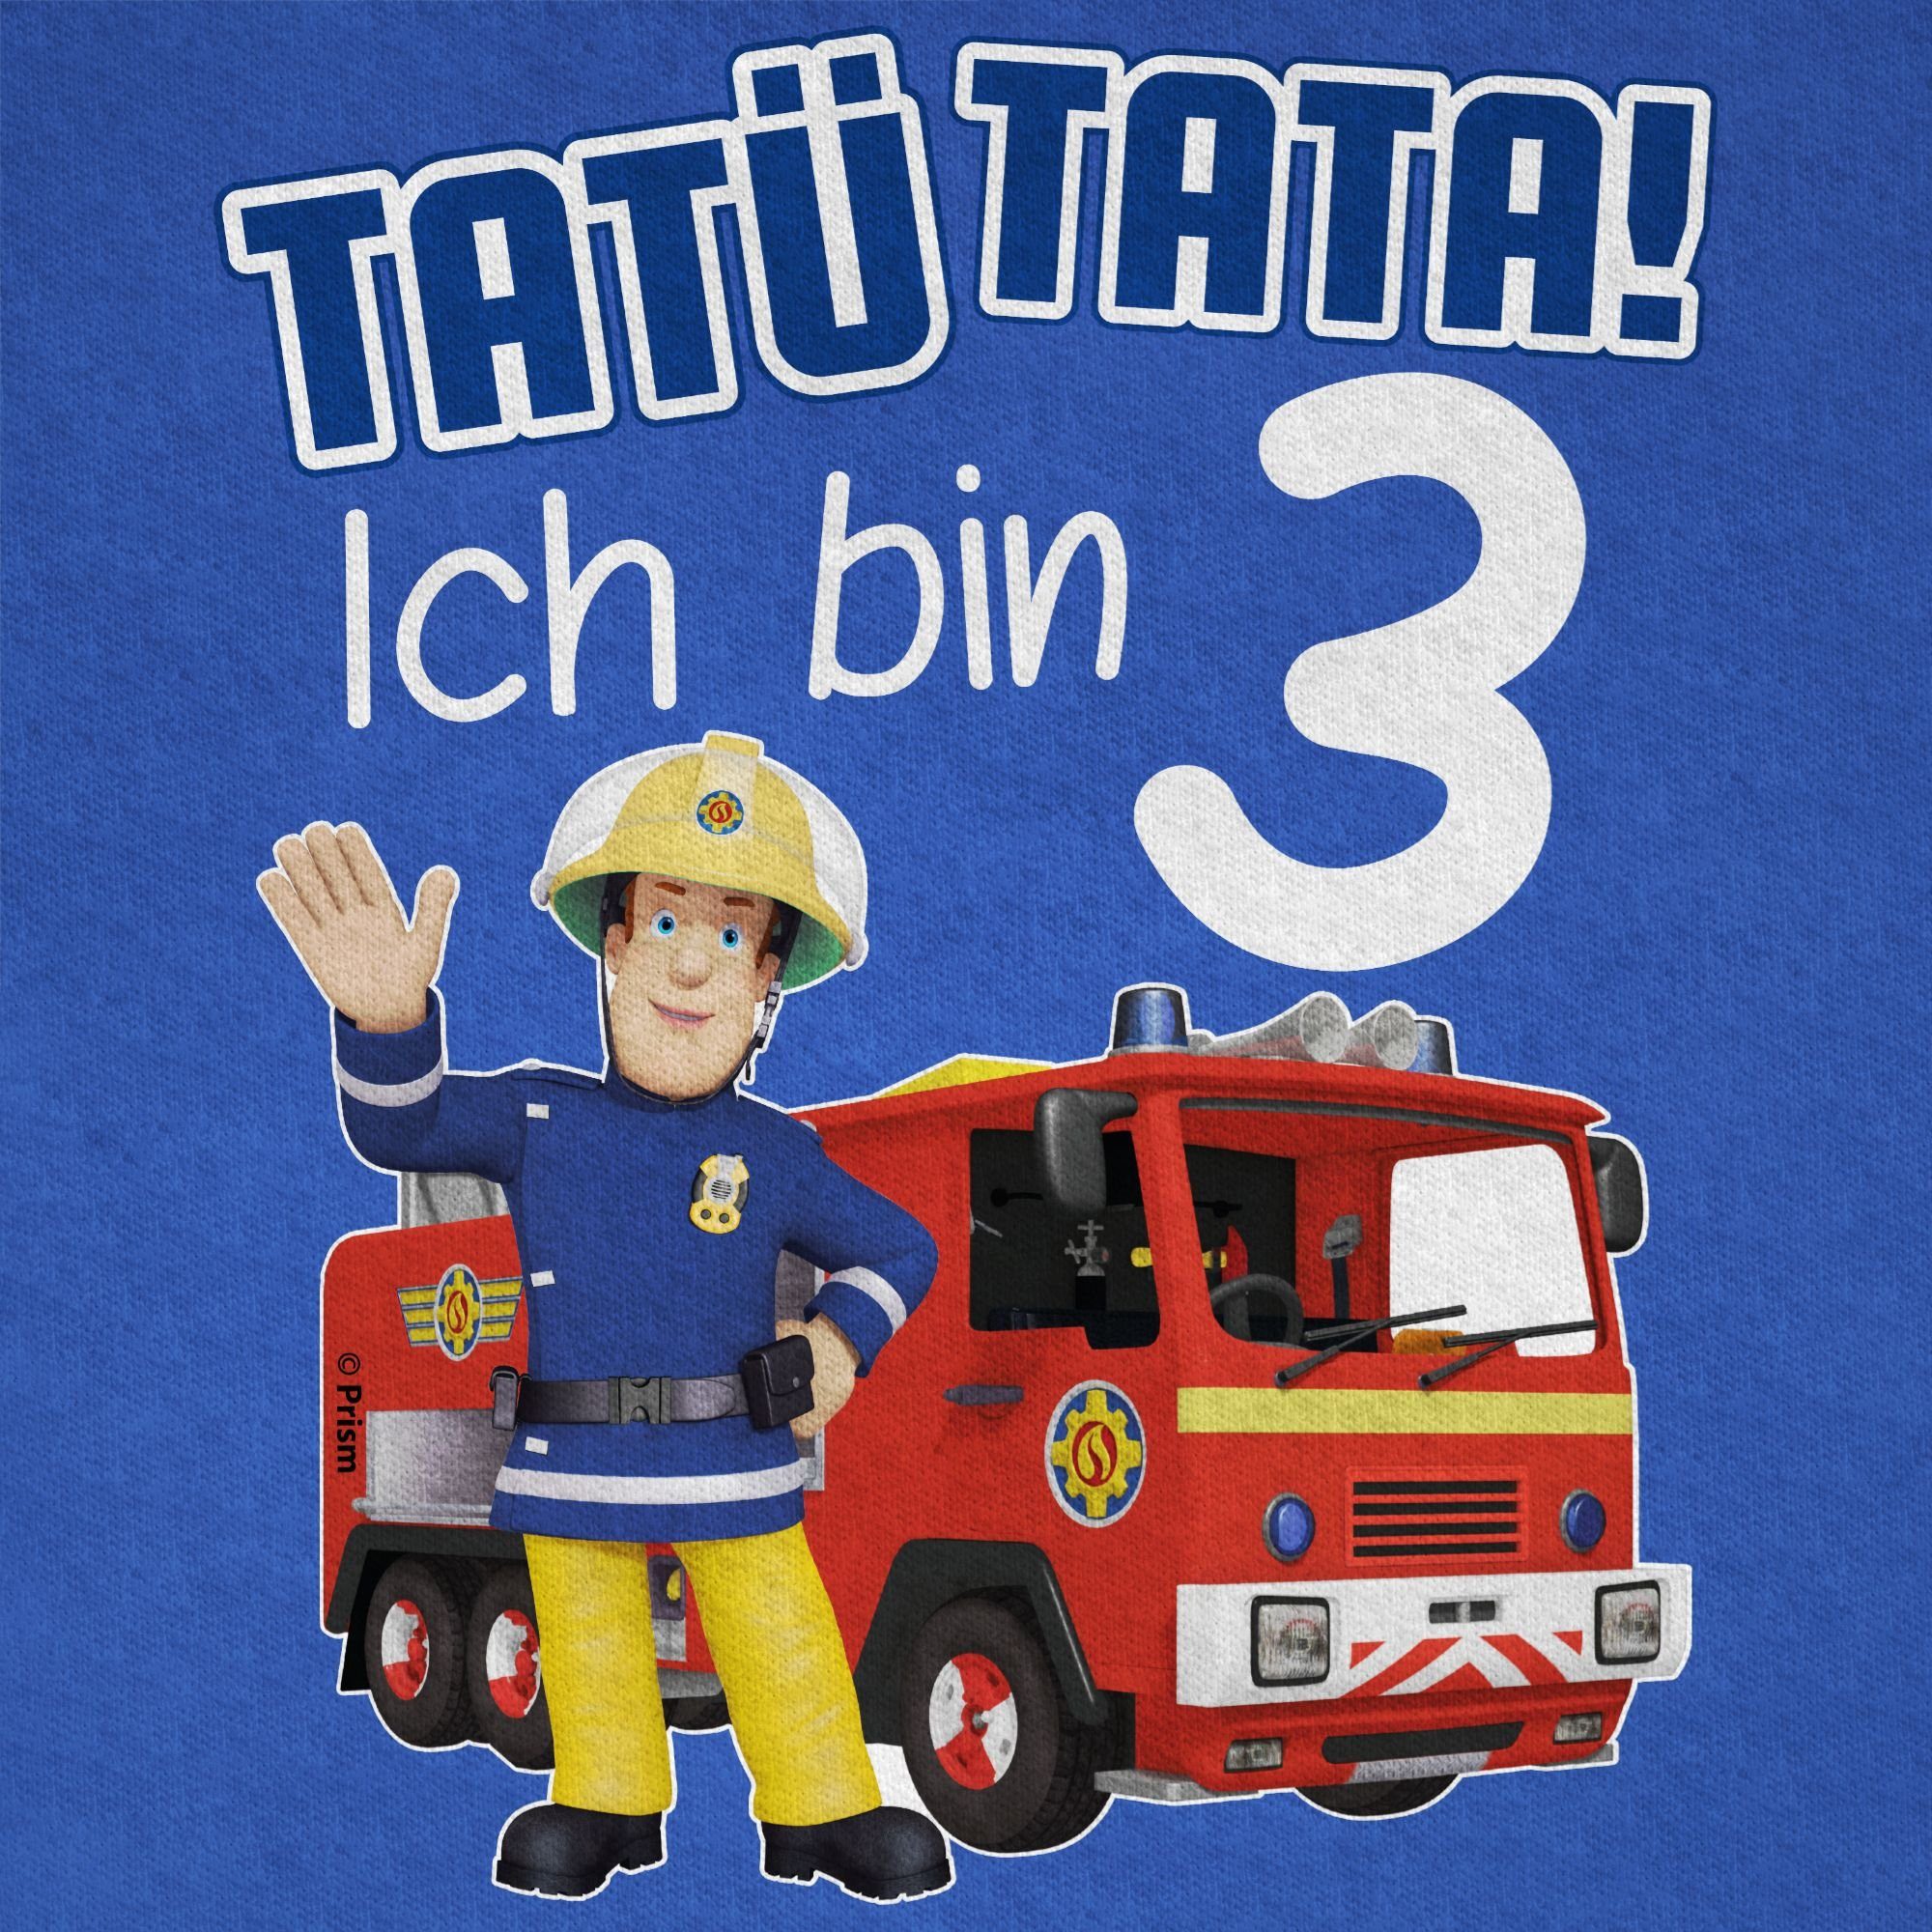 Shirtracer T-Shirt Tatü Tata! Sam 03 3 bin Feuerwehrmann Jungen Ich Royalblau